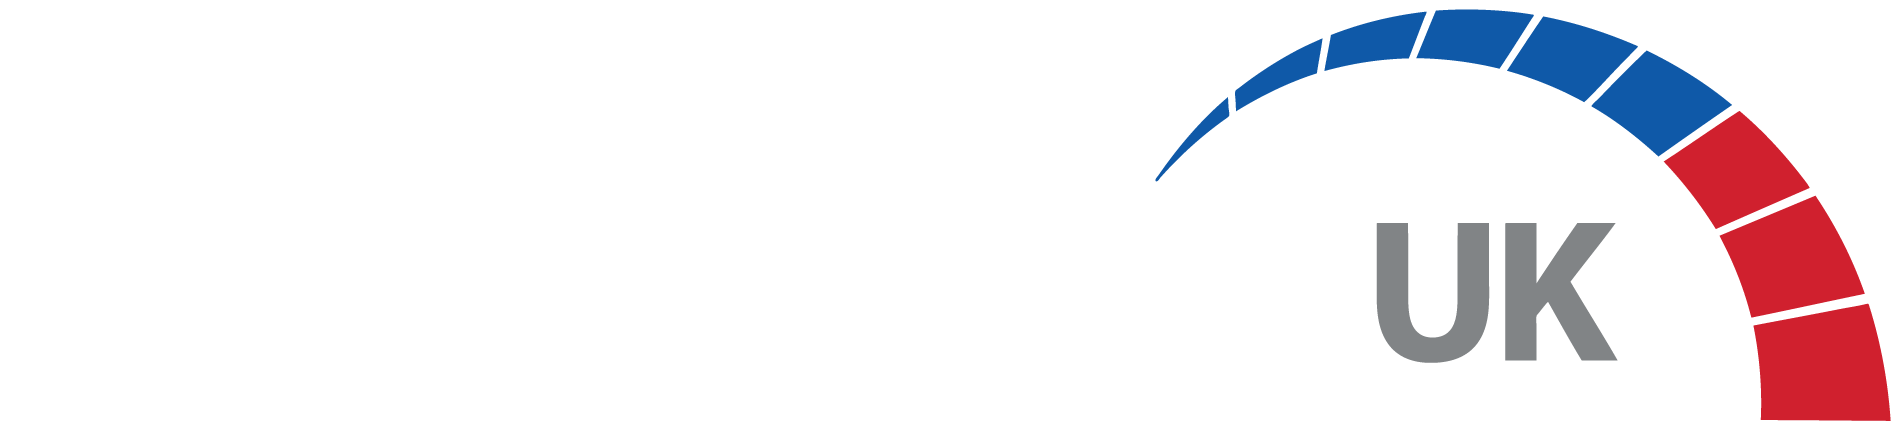 OCUK logo